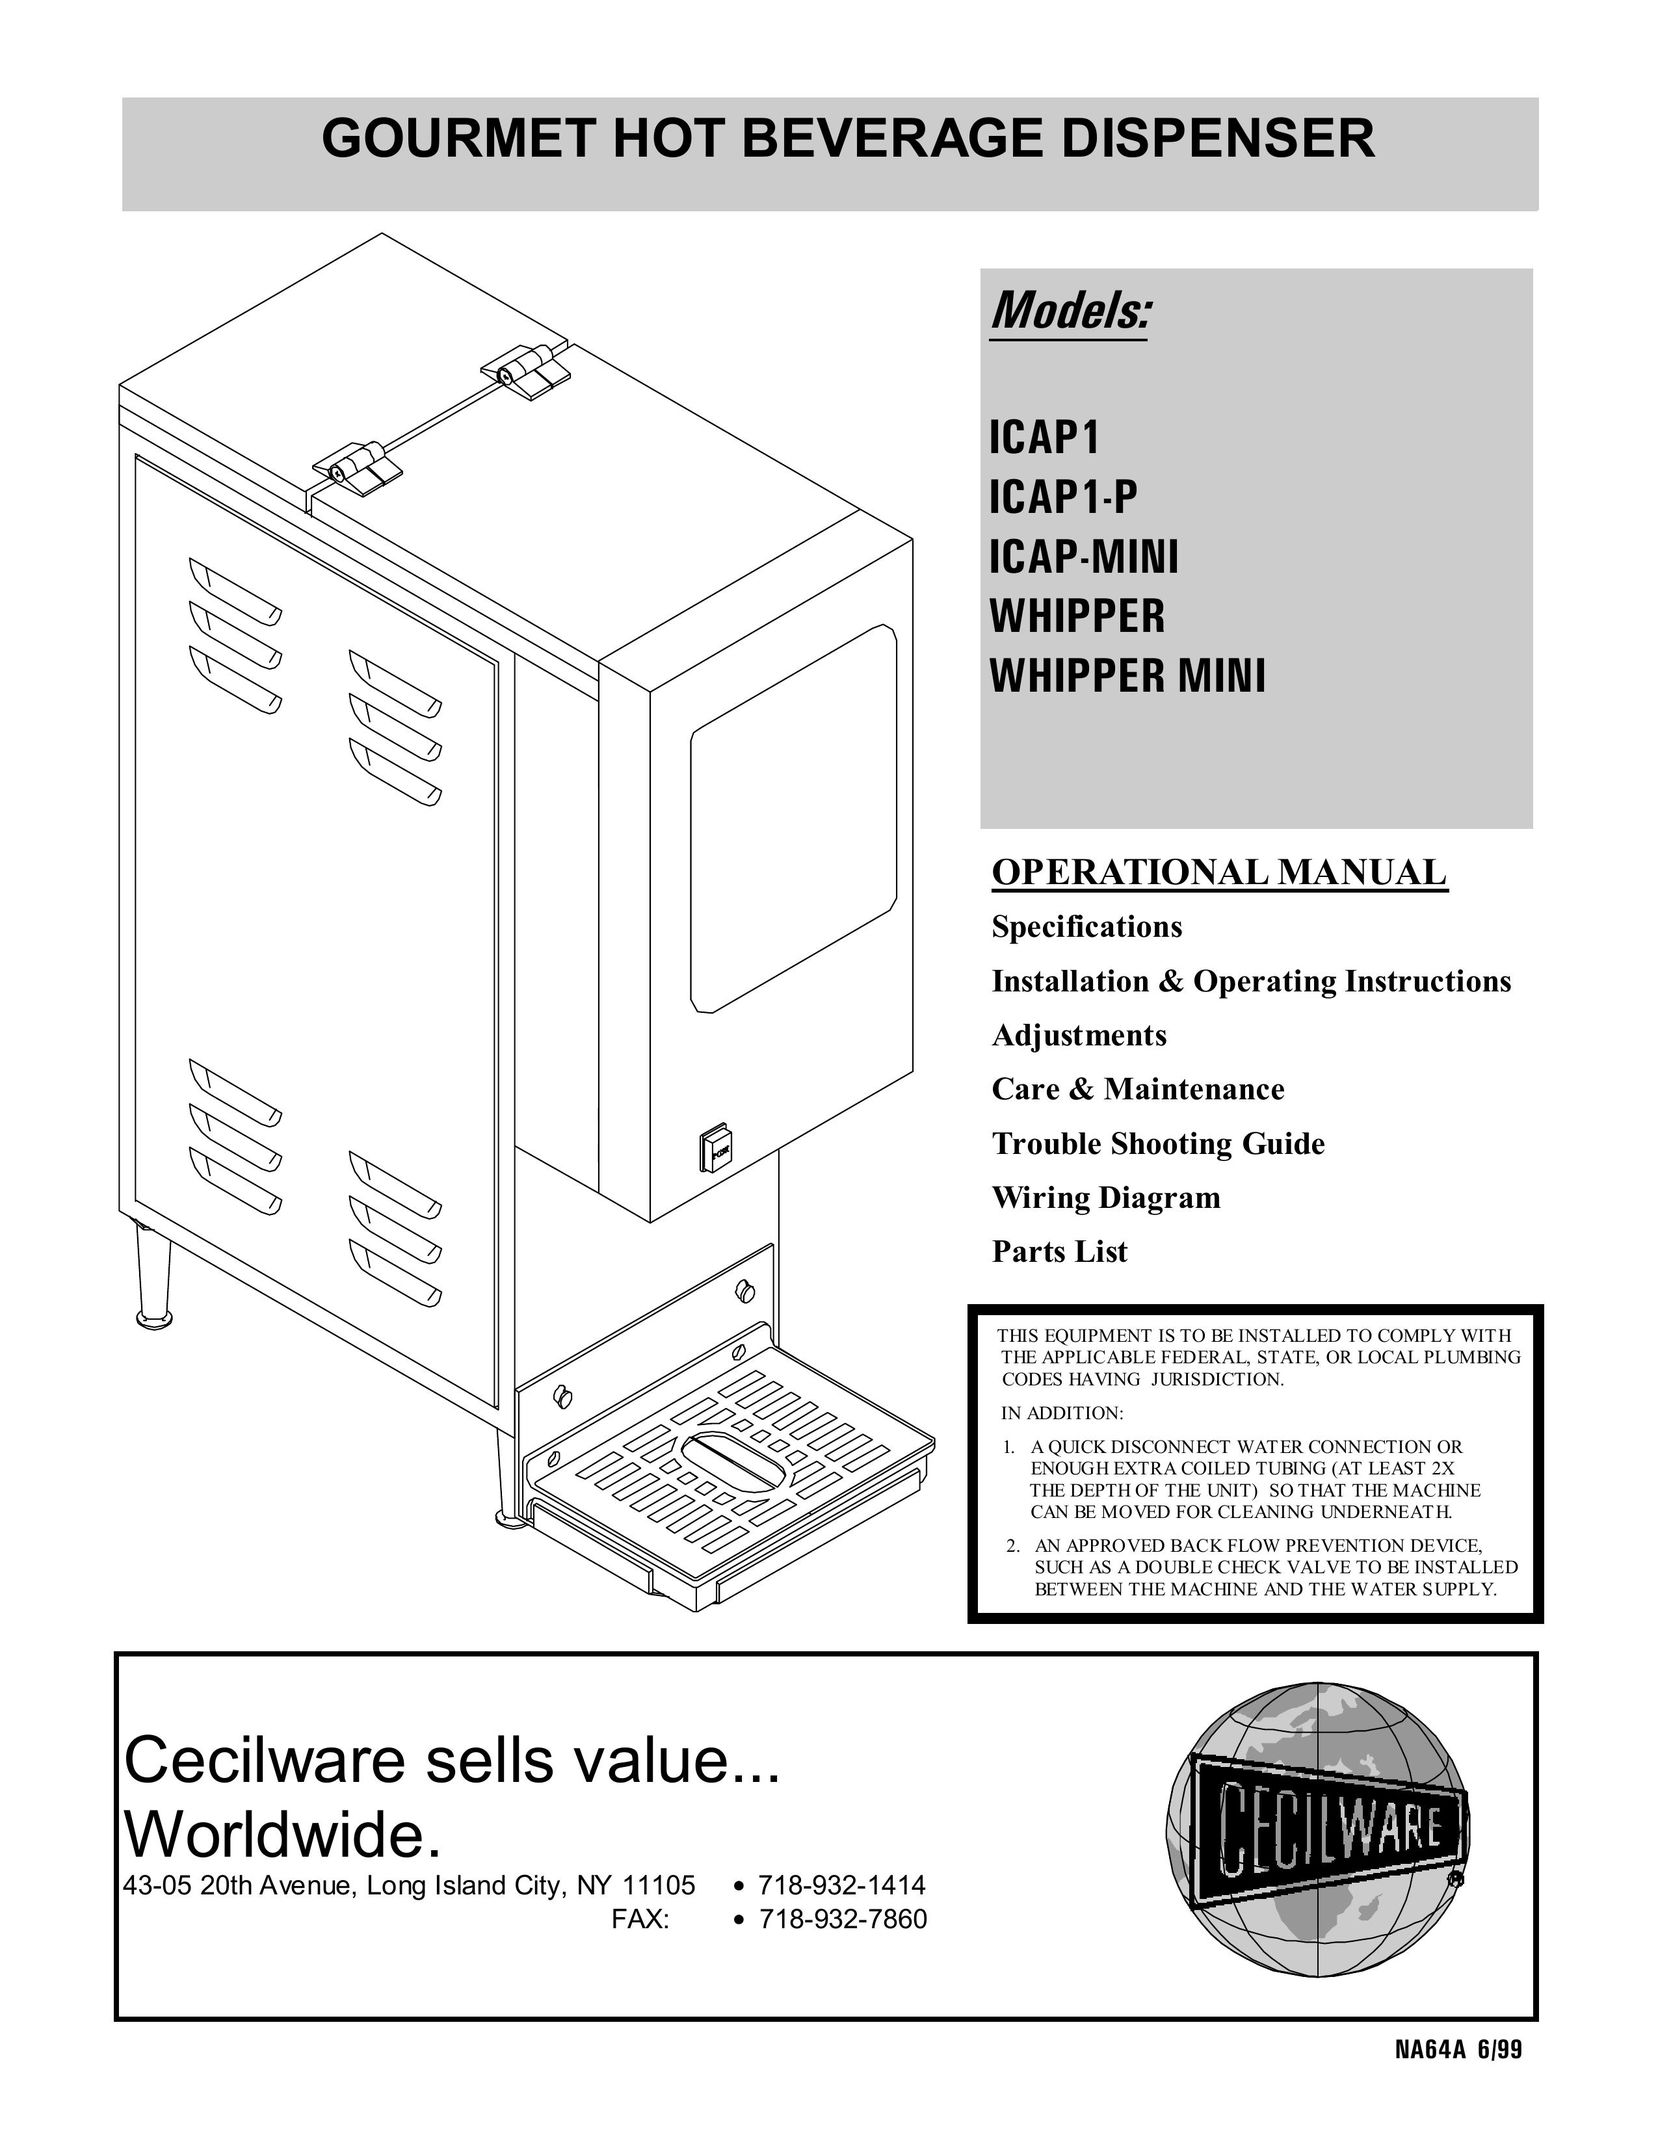 Cecilware ICAP1 Coffeemaker User Manual